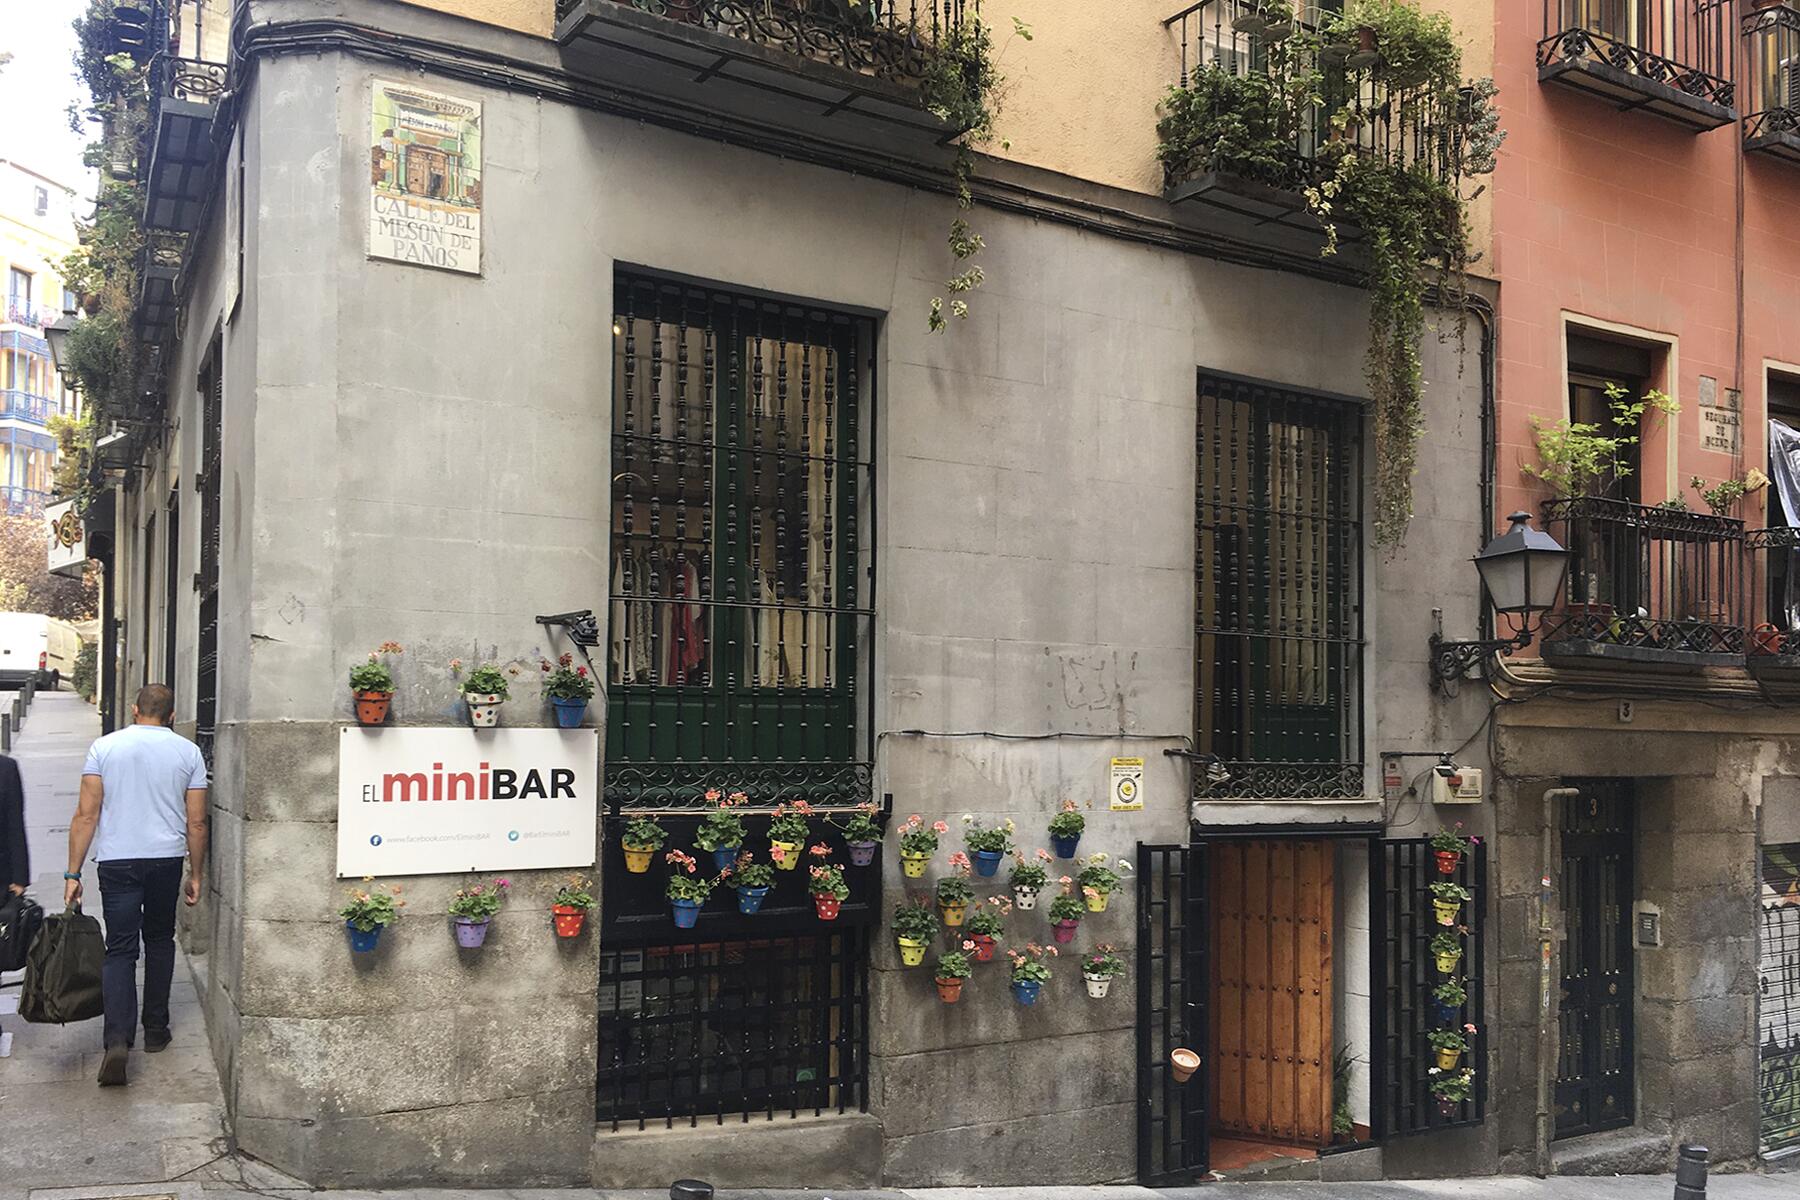 <a href='https://www.fodors.com/world/europe/spain/madrid/experiences/news/photos/best-tapas-restaurants-in-madrid#'>From &quot;The 15 Best Tapas Restaurants in Madrid: El Minibar&quot;</a>